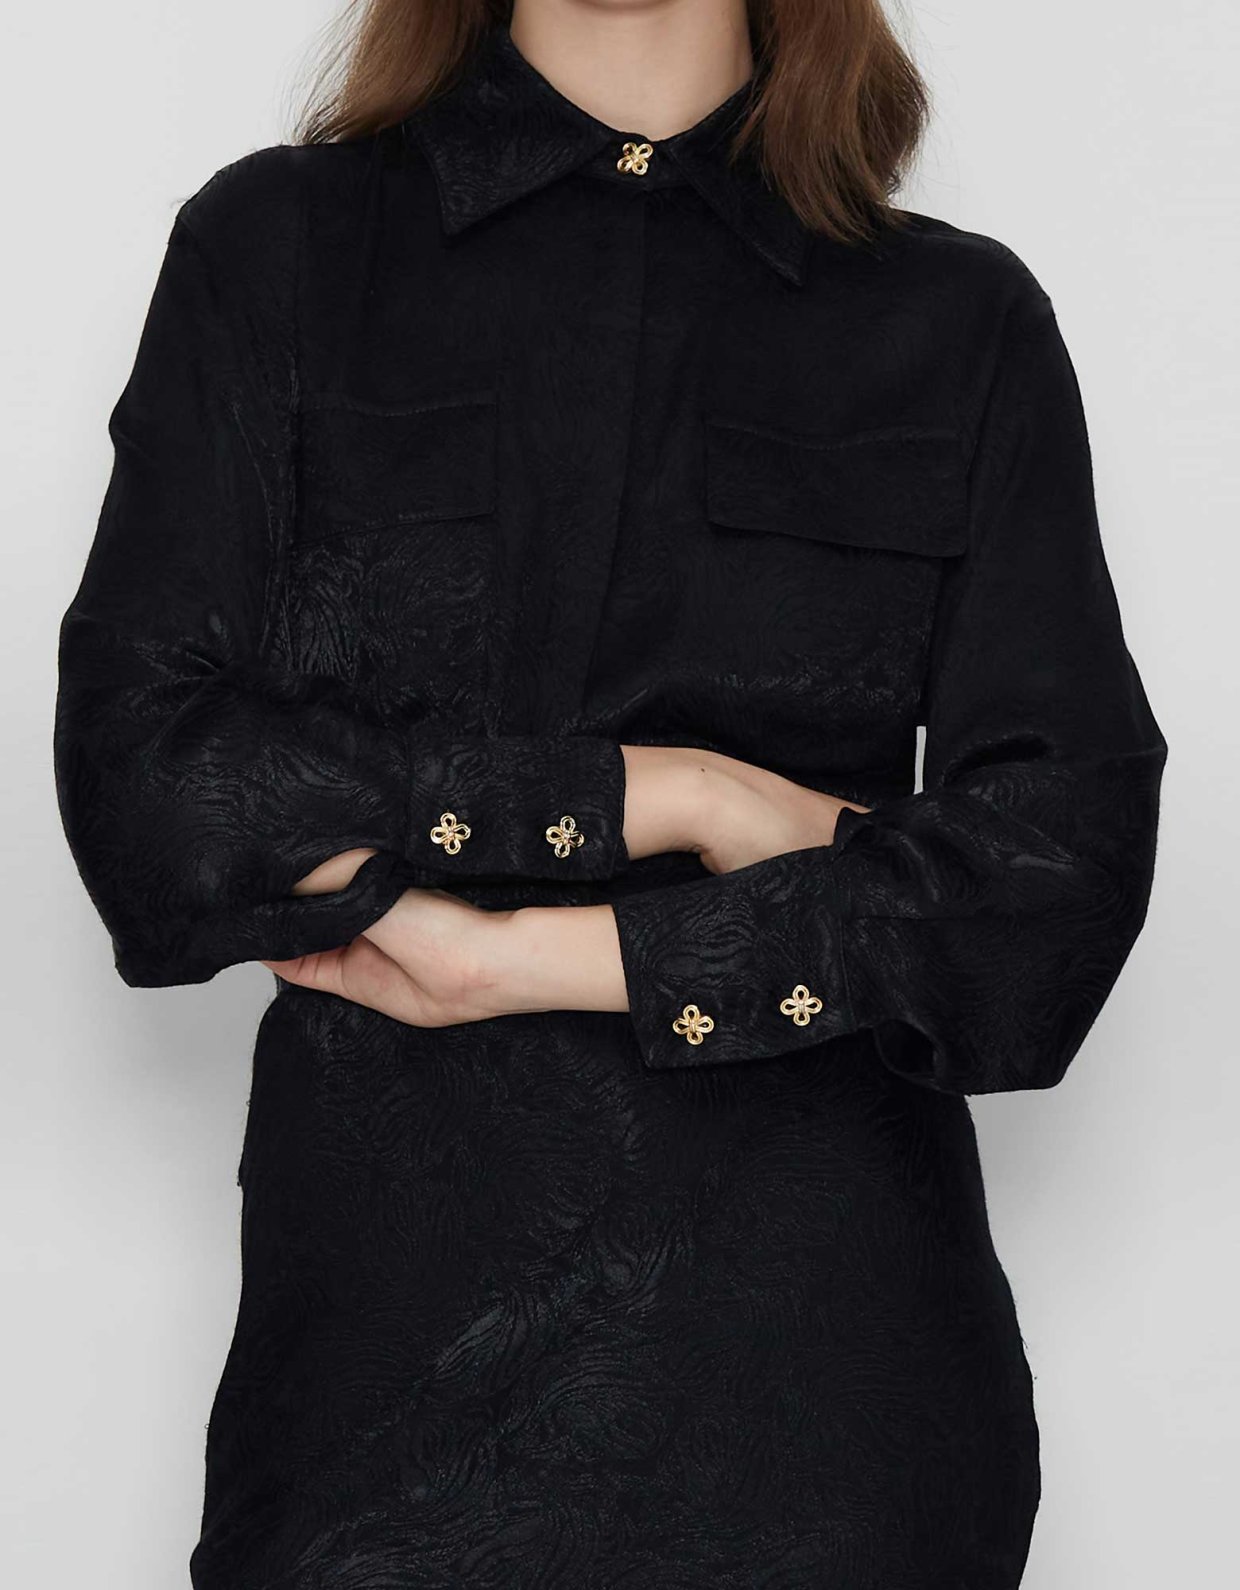 Nadia Rapti Lotus shirt black